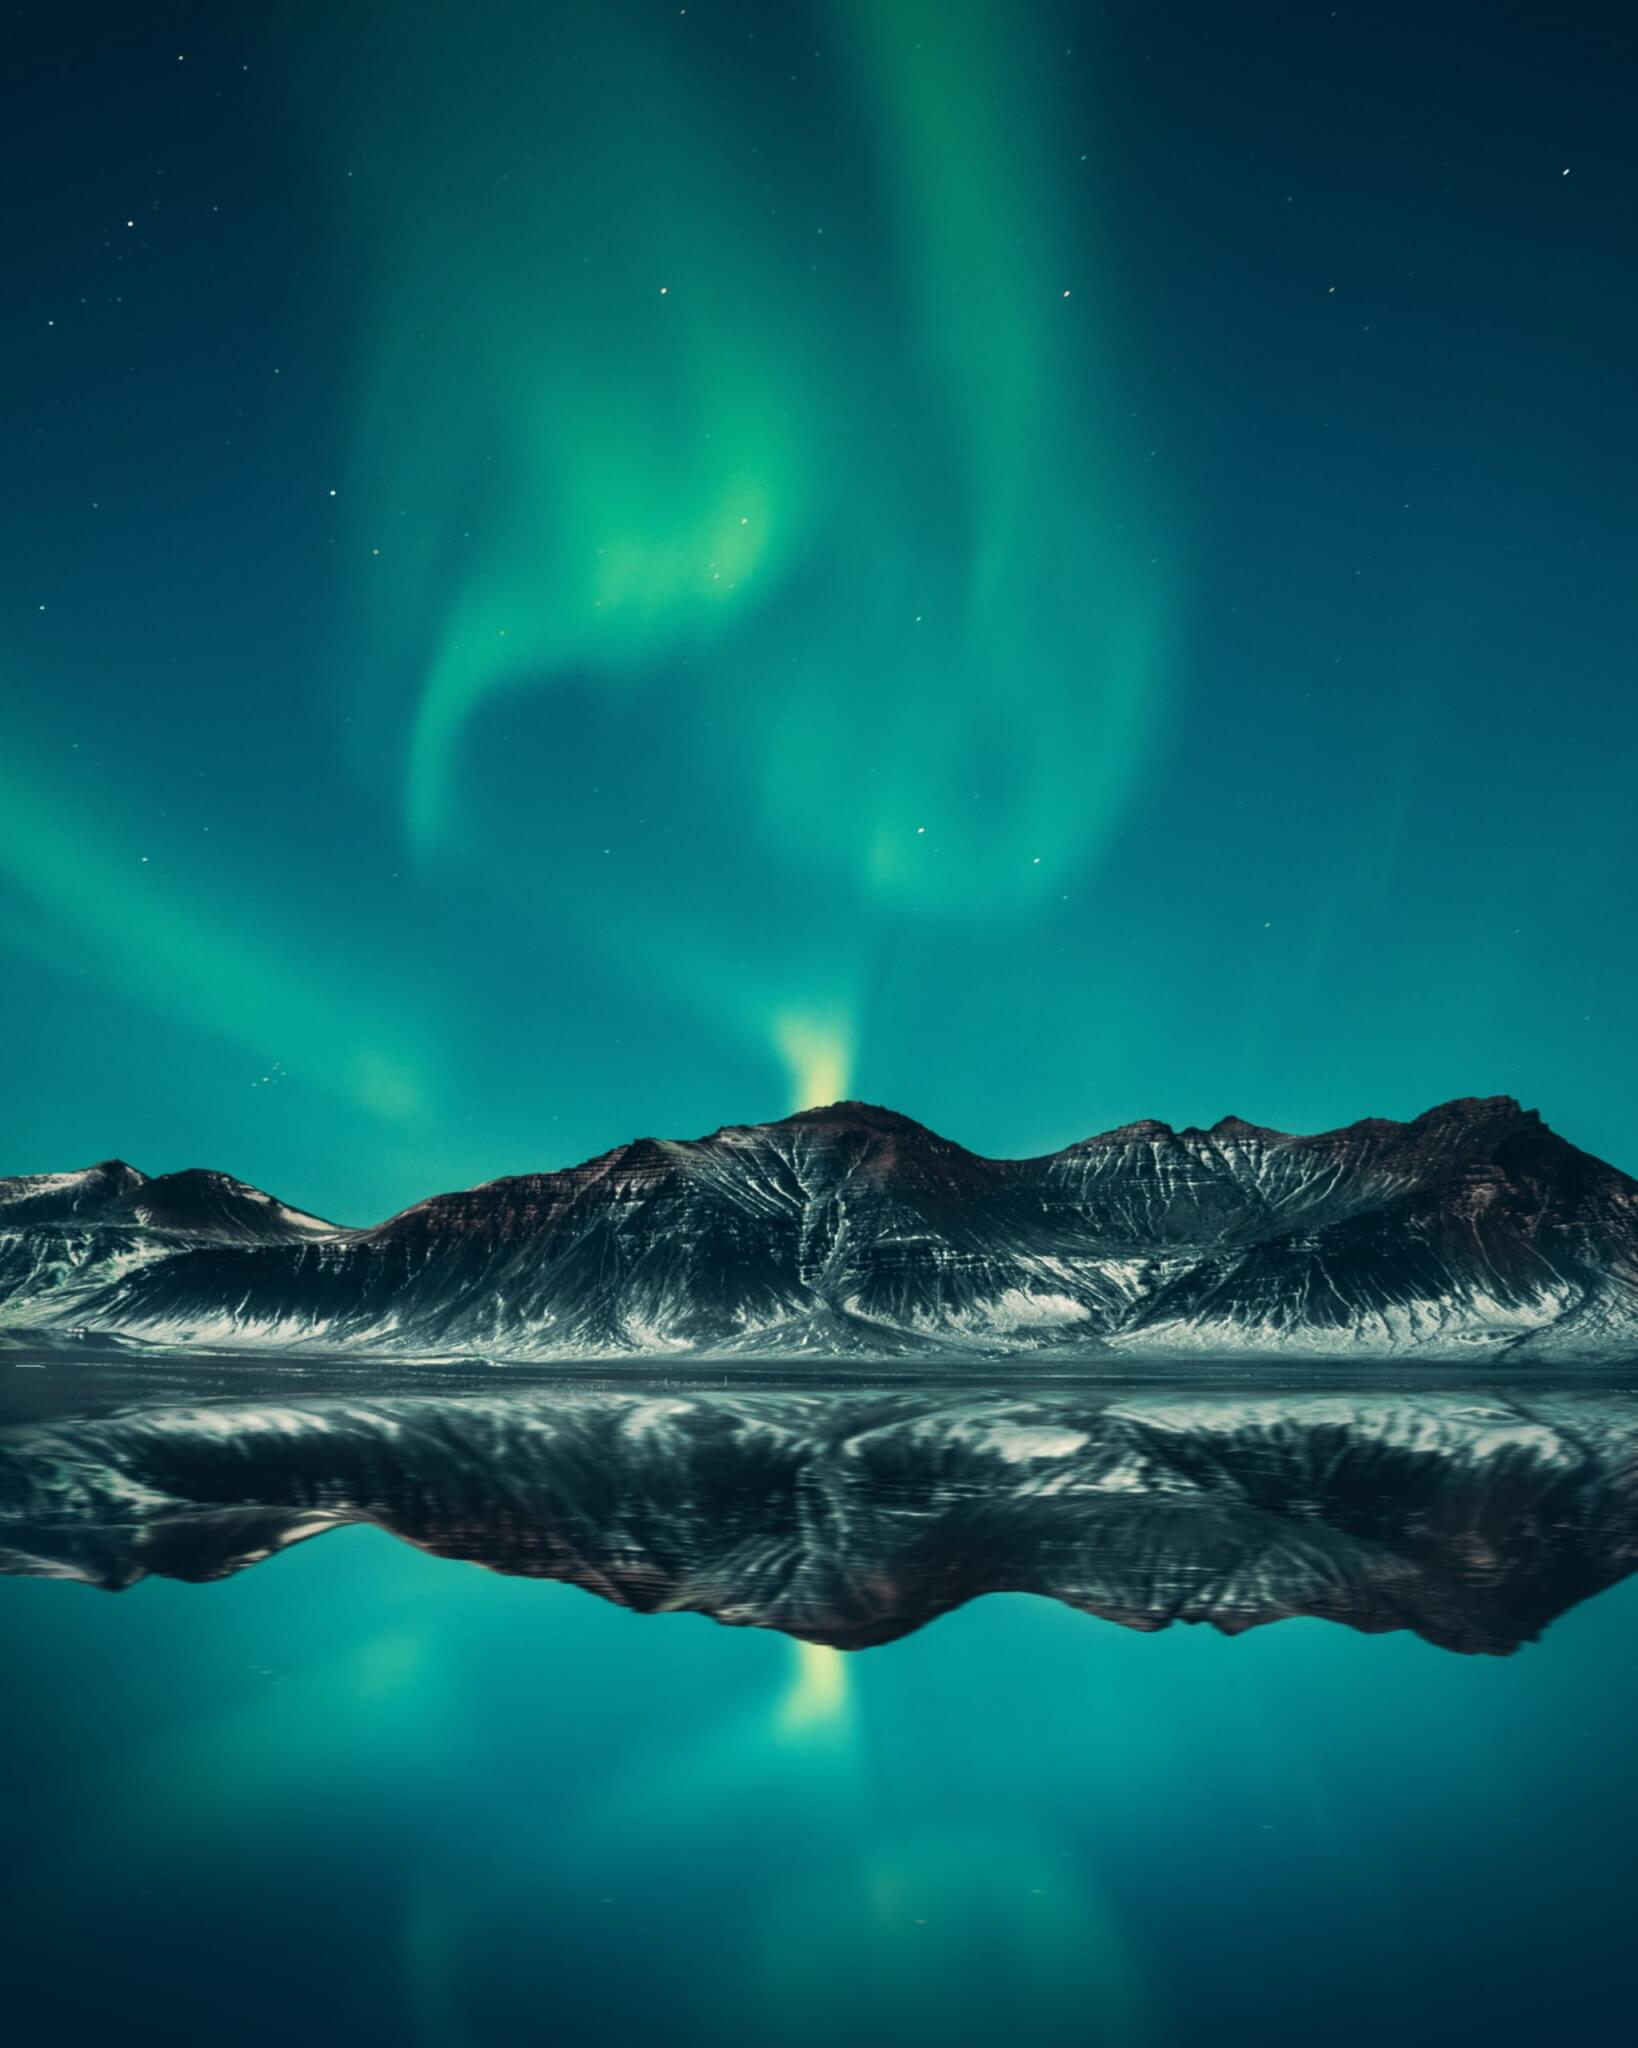 Green aurora over Iceland mountains.